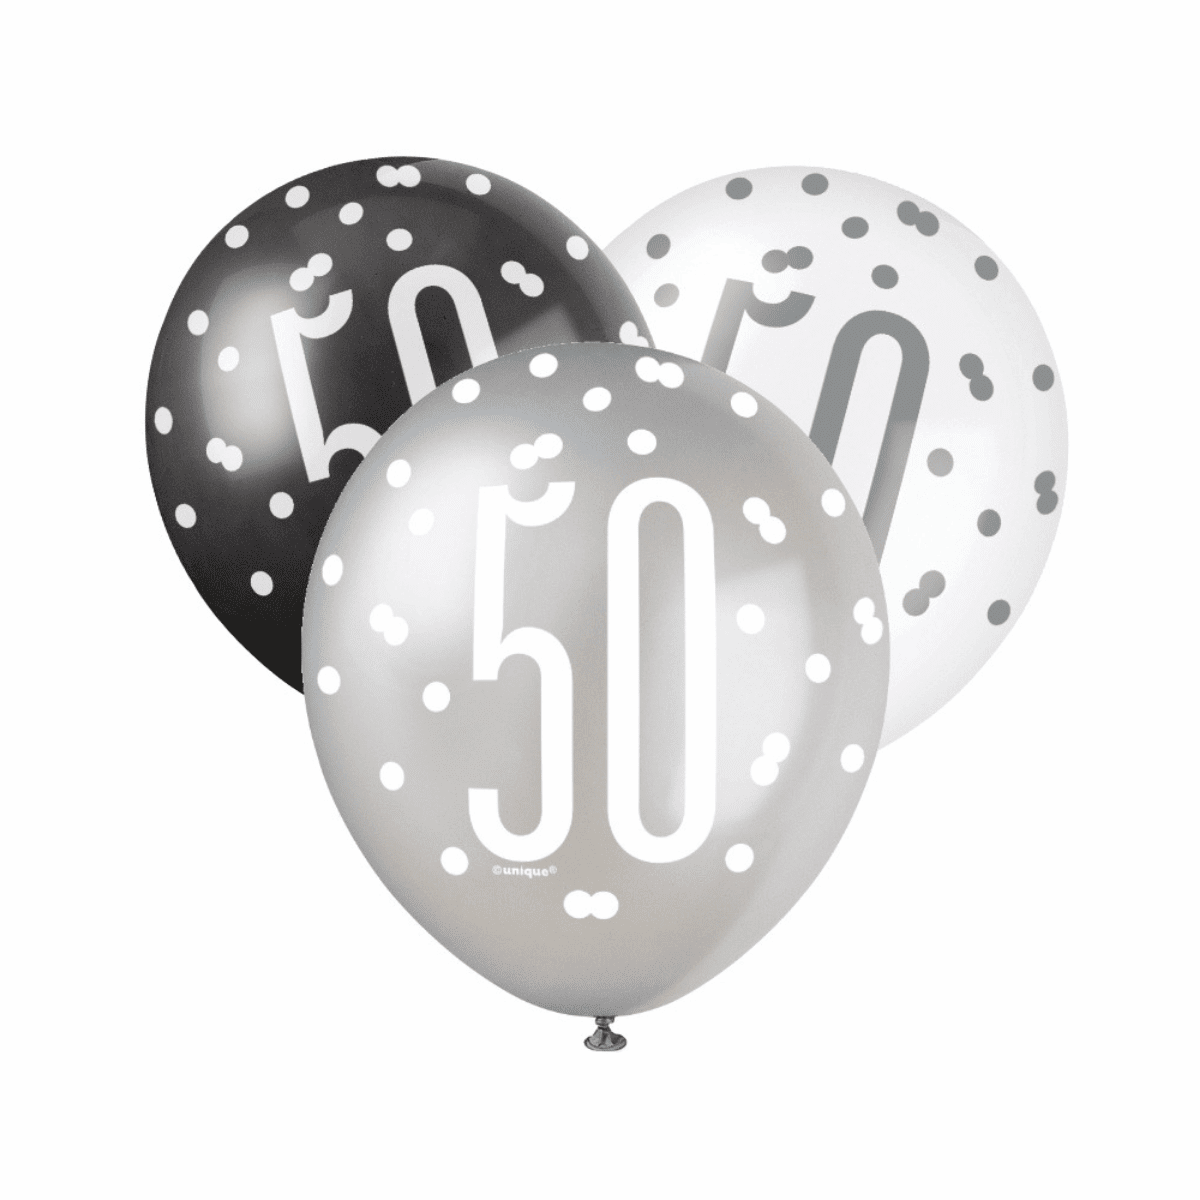 Black, Silver, & White Latex Balloons 50th